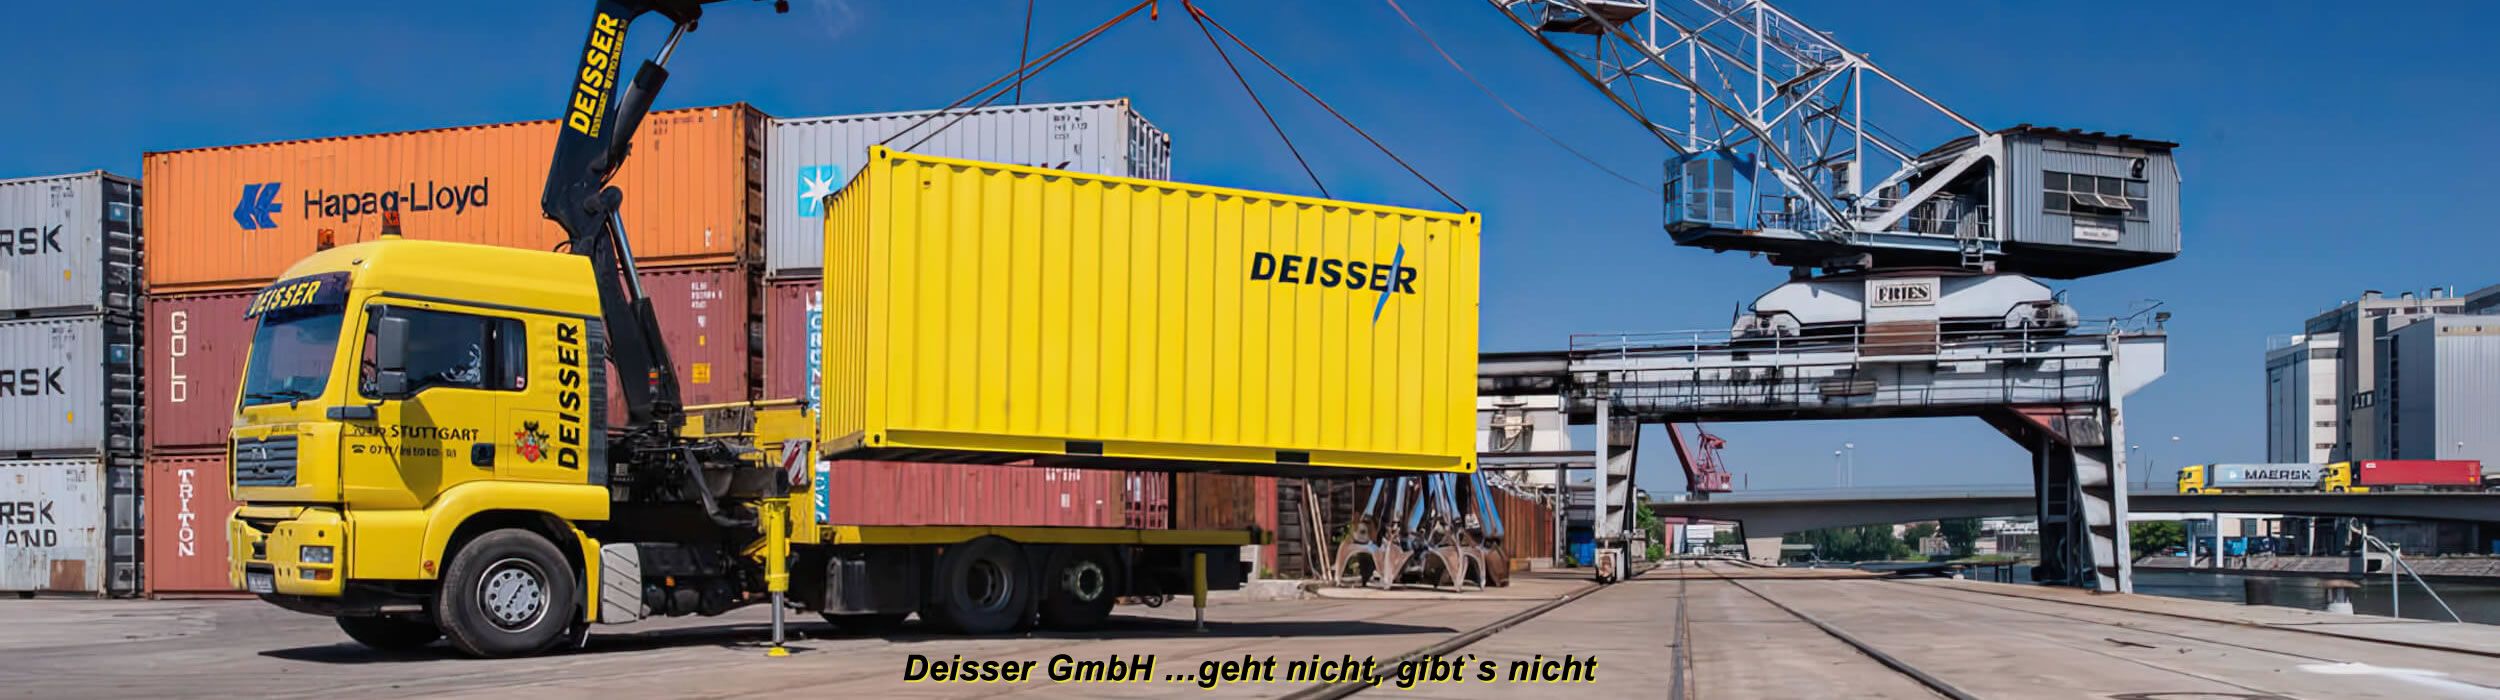 Deisser GmbH / Transportlogistik Seecontainer / Downloads